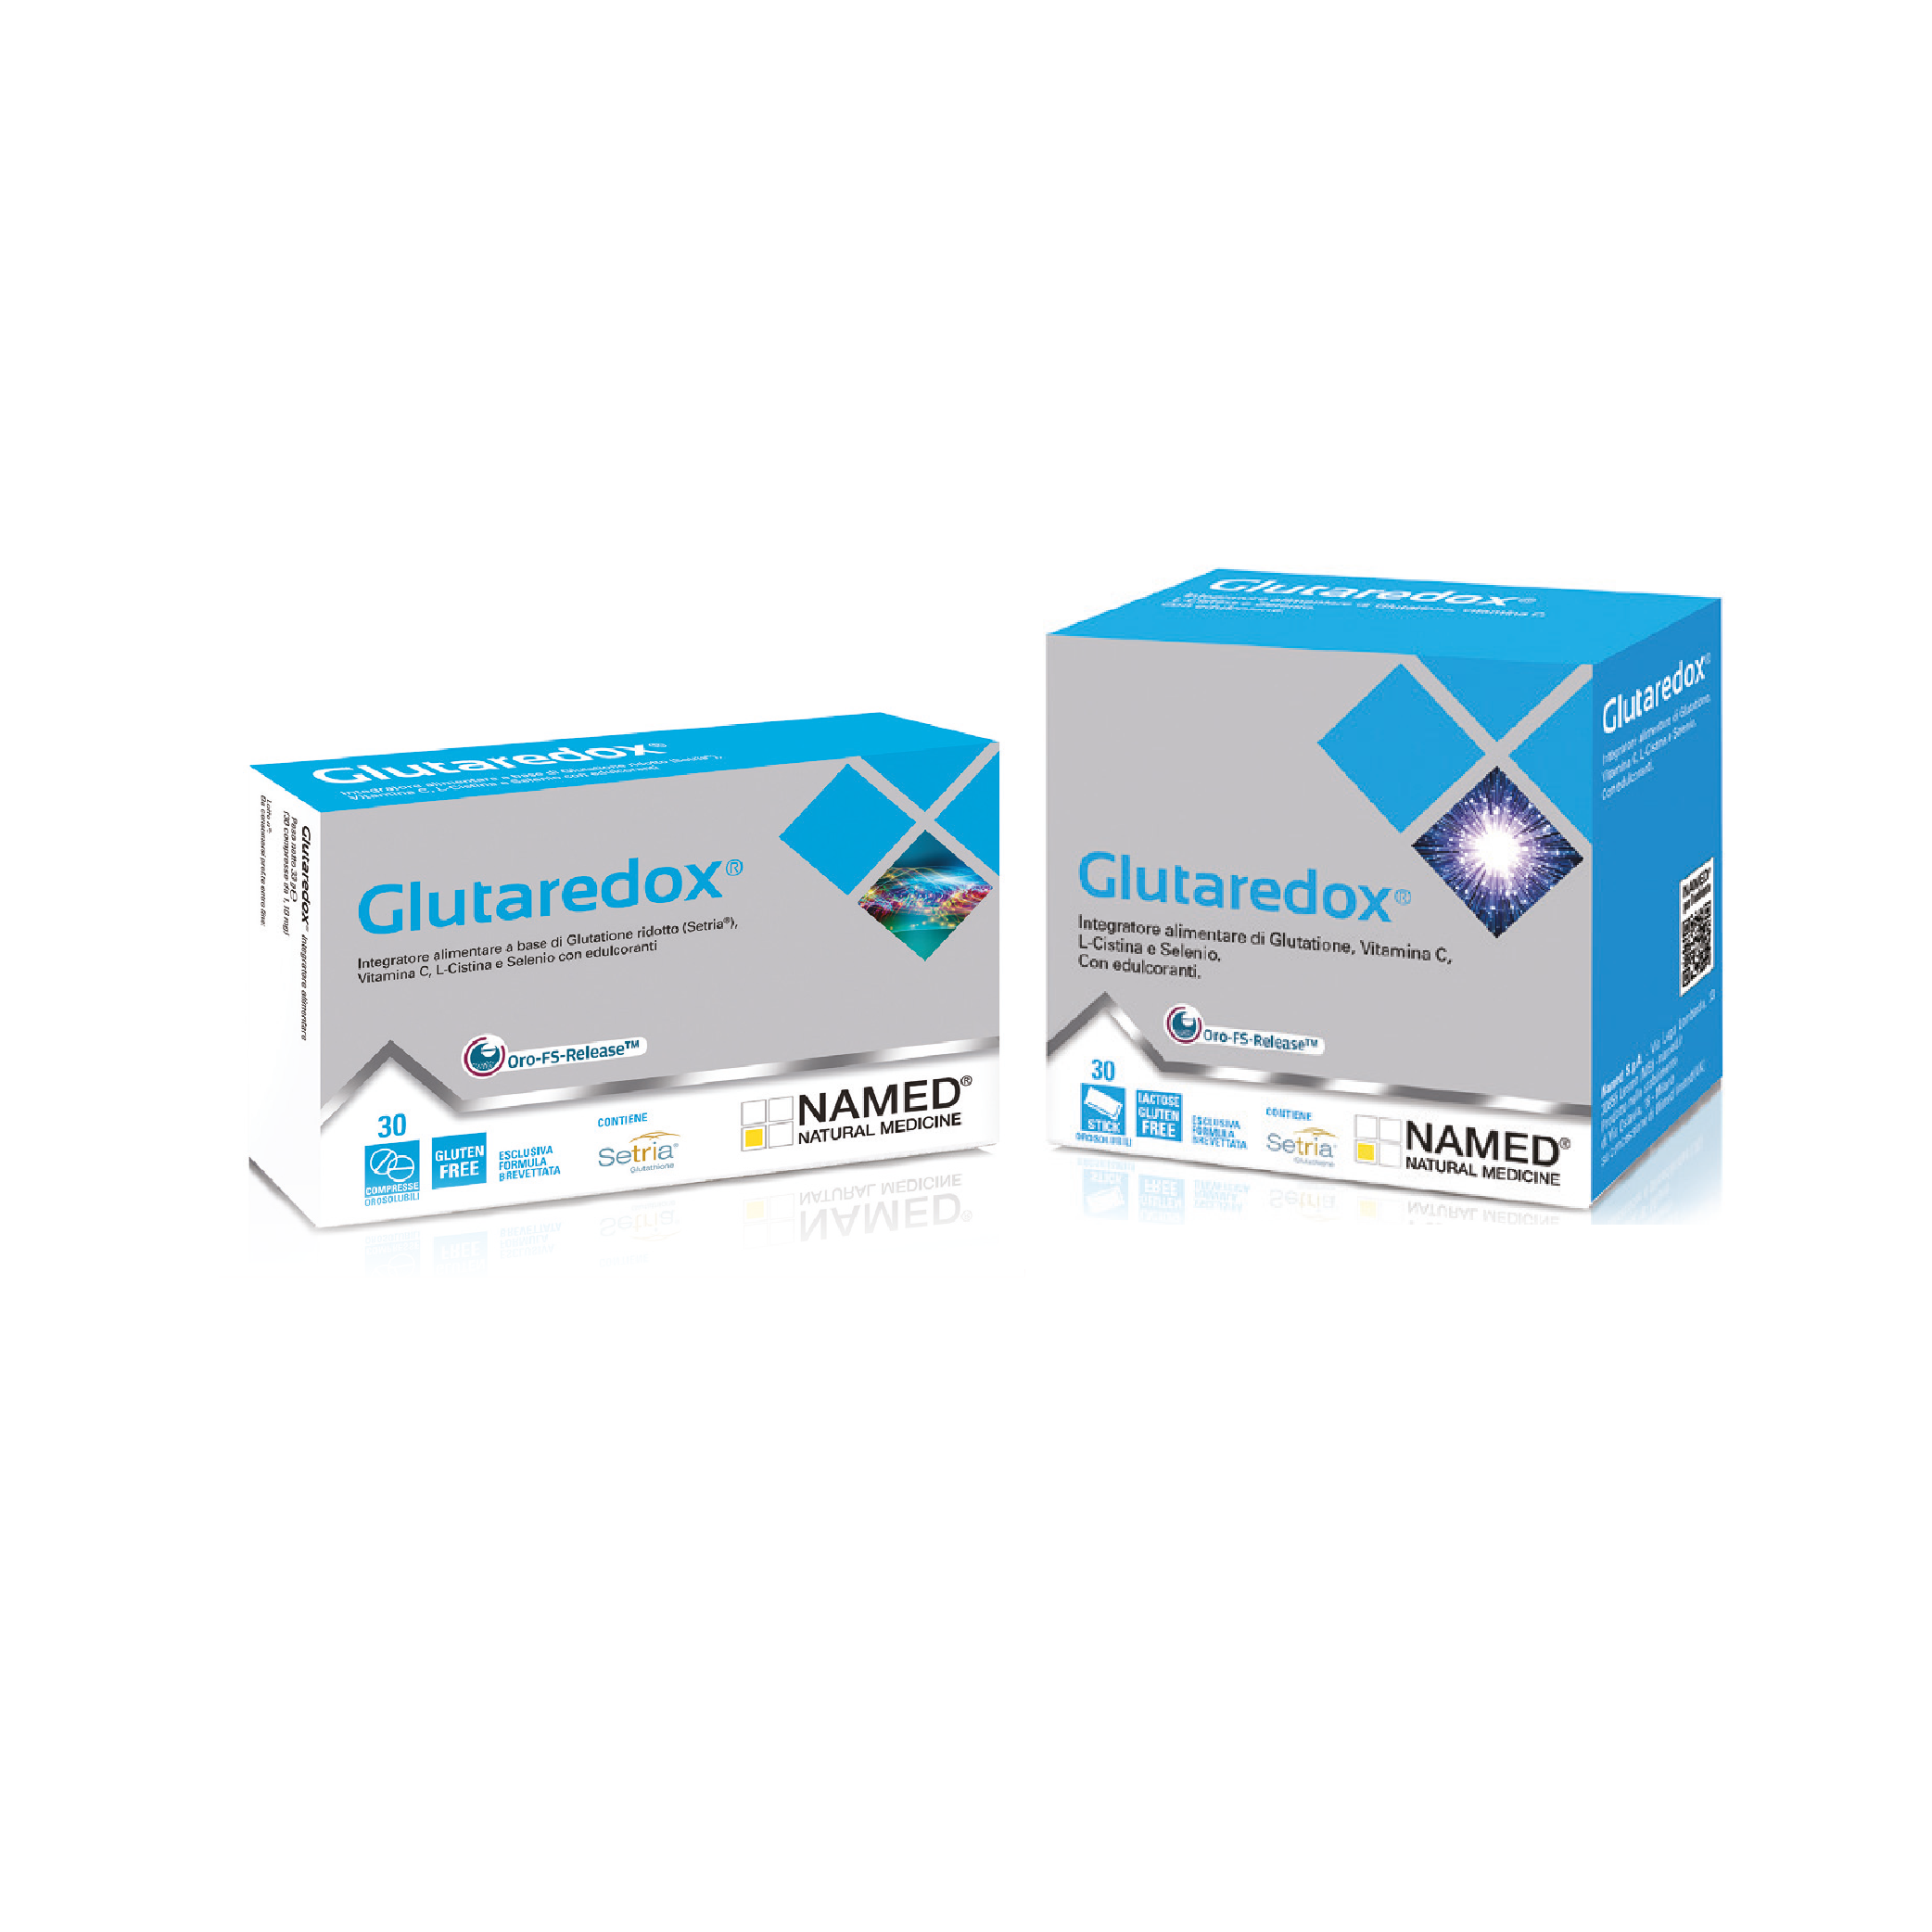 NamedGroup – Glutaredox